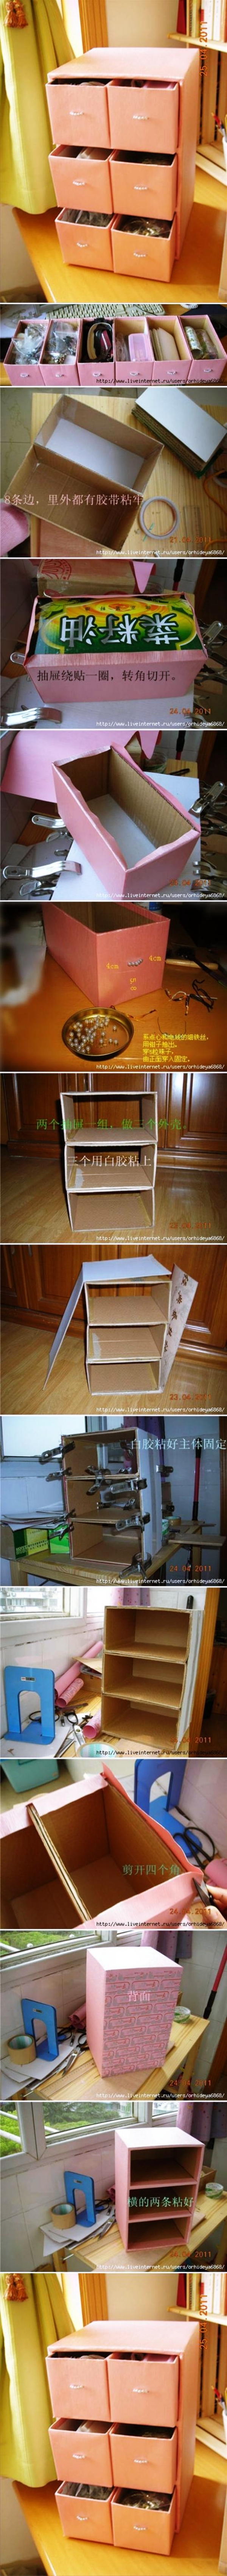 Genius-Ways-to-Use-Old-Cardboard-Boxes